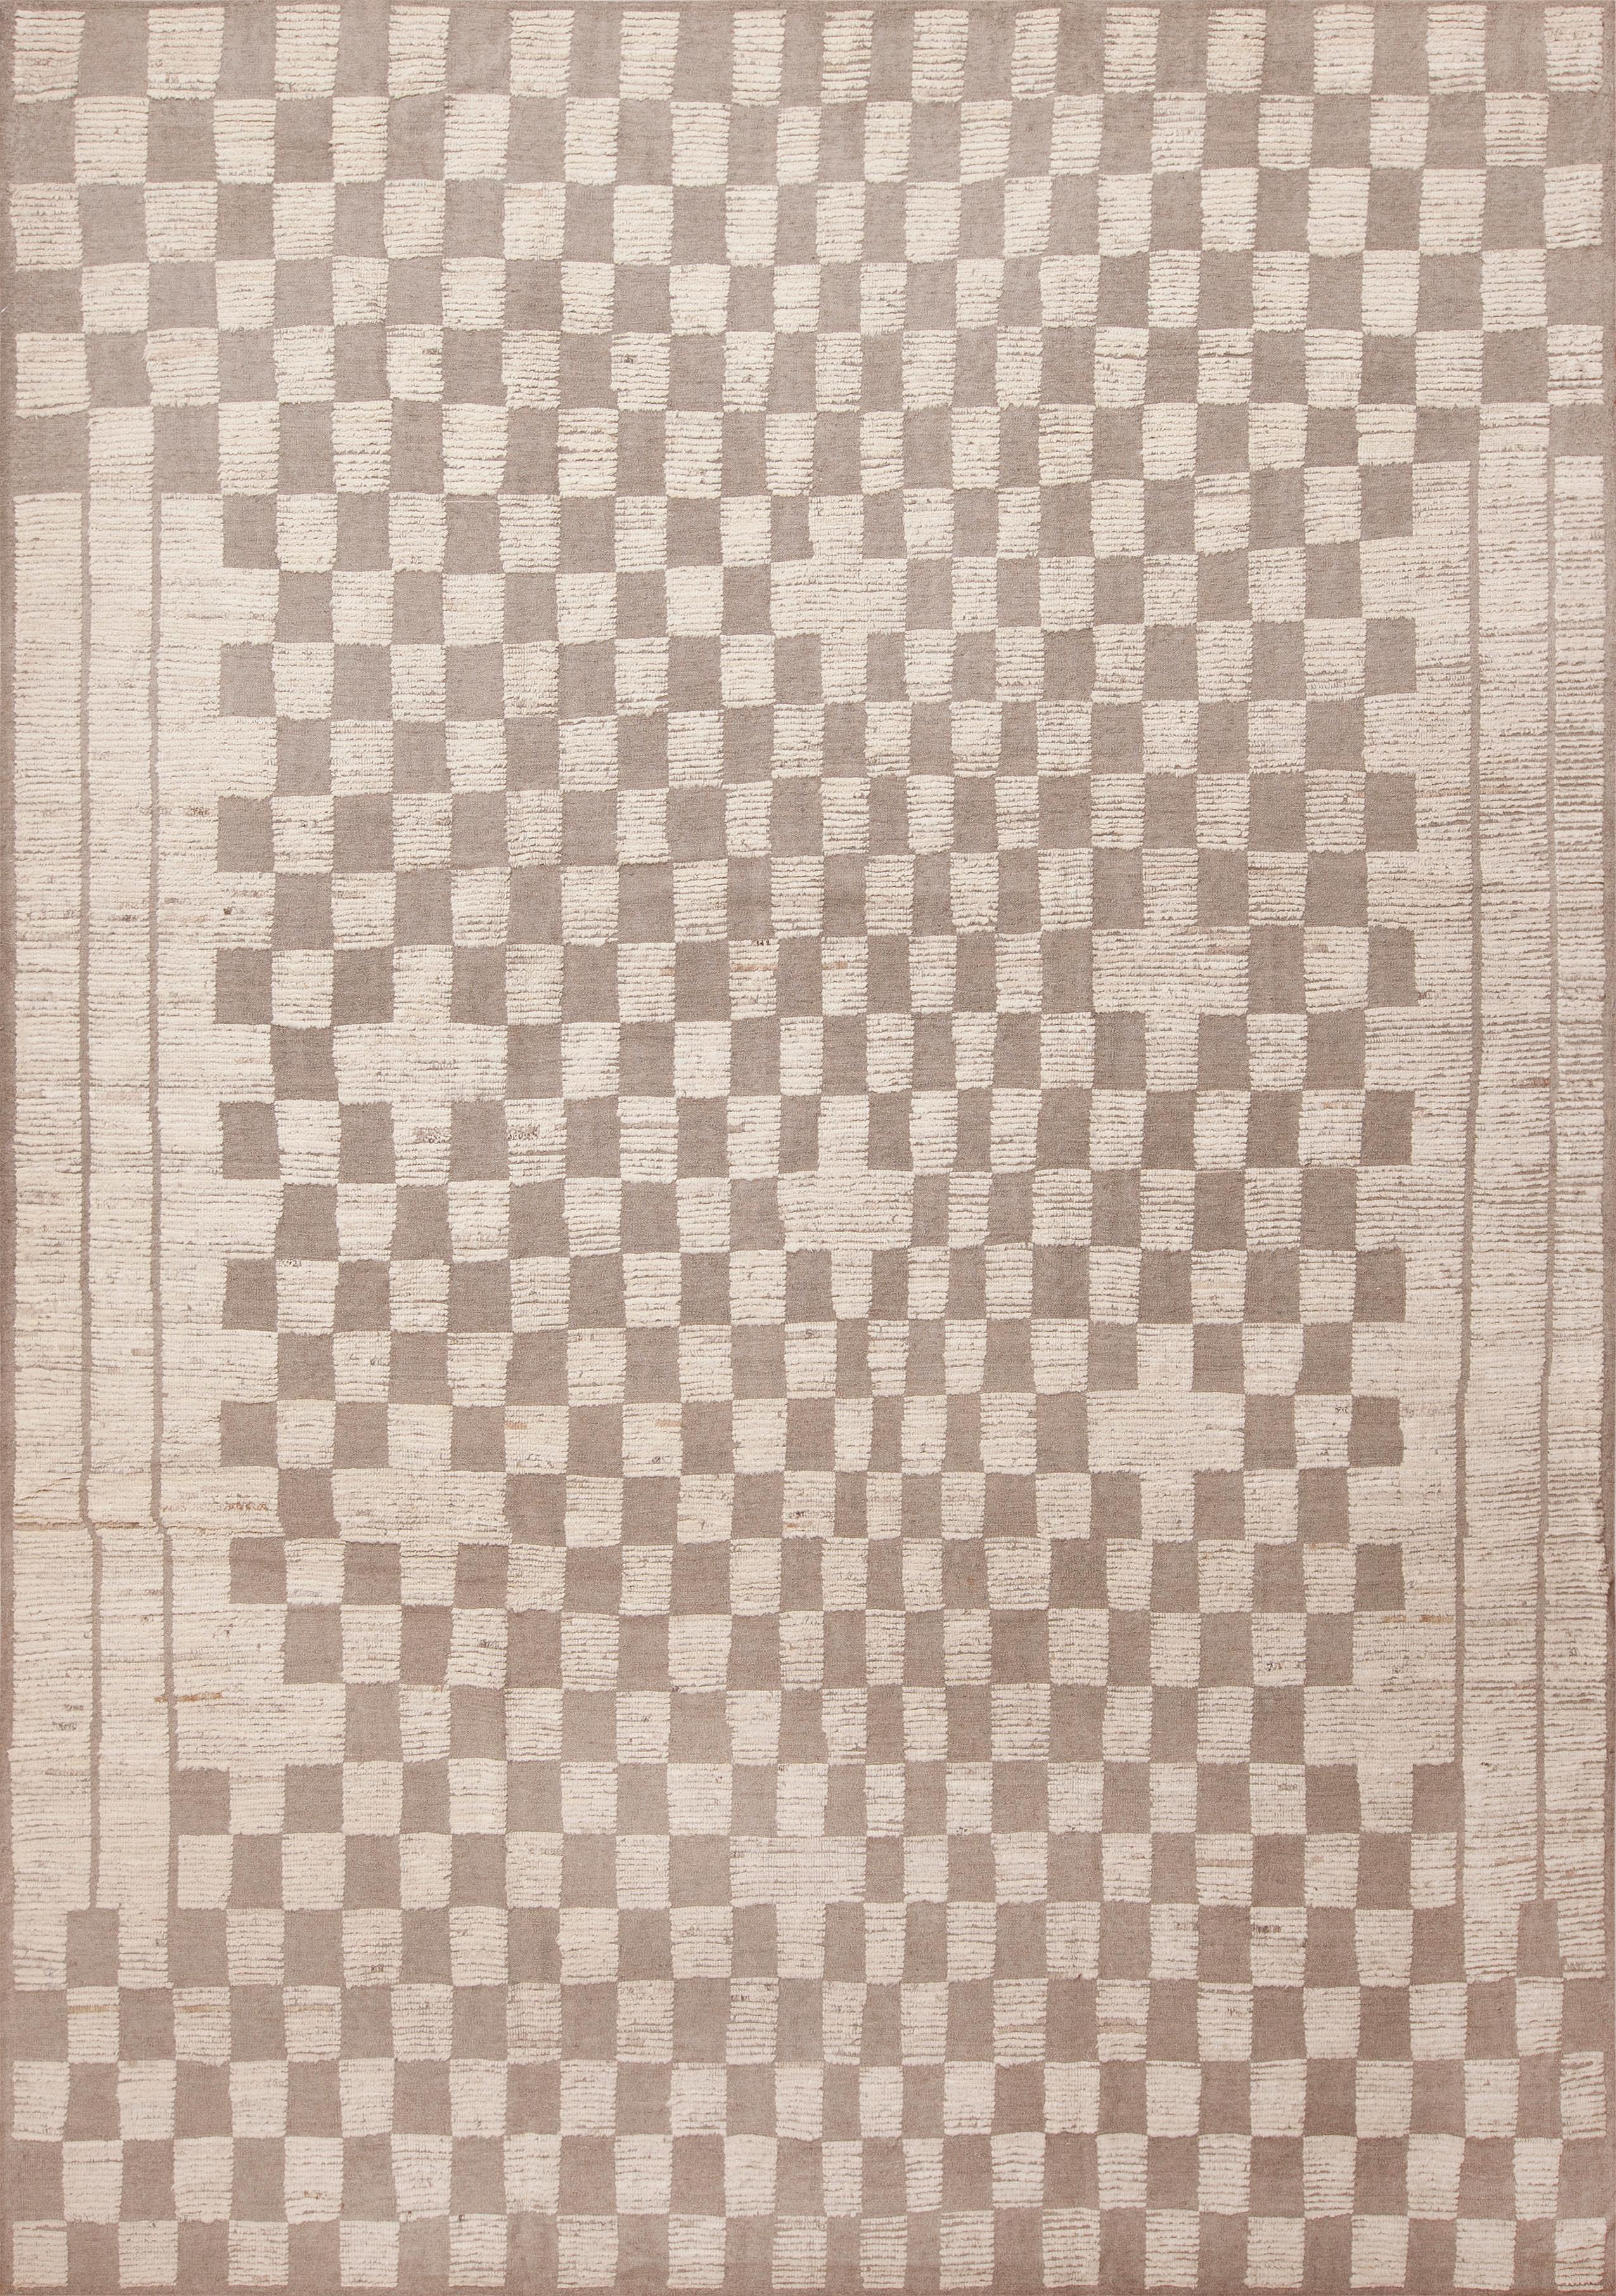 Central Asian Nazmiyal Collection Neutral Tribal Checkboard Design Modern Rug 9'7